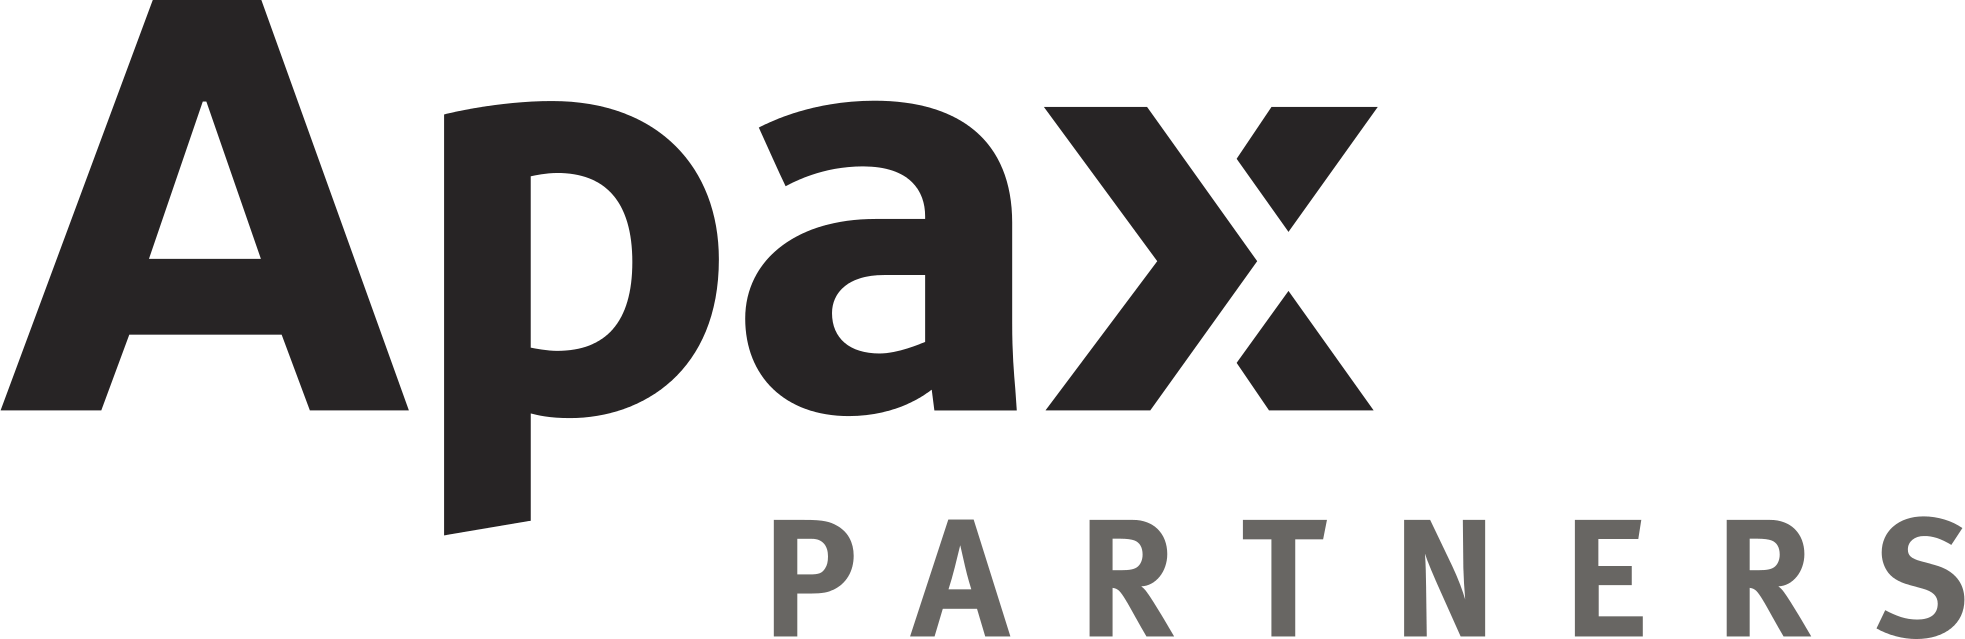 Apax Logo - File:Apax logo.svg - Wikimedia Commons